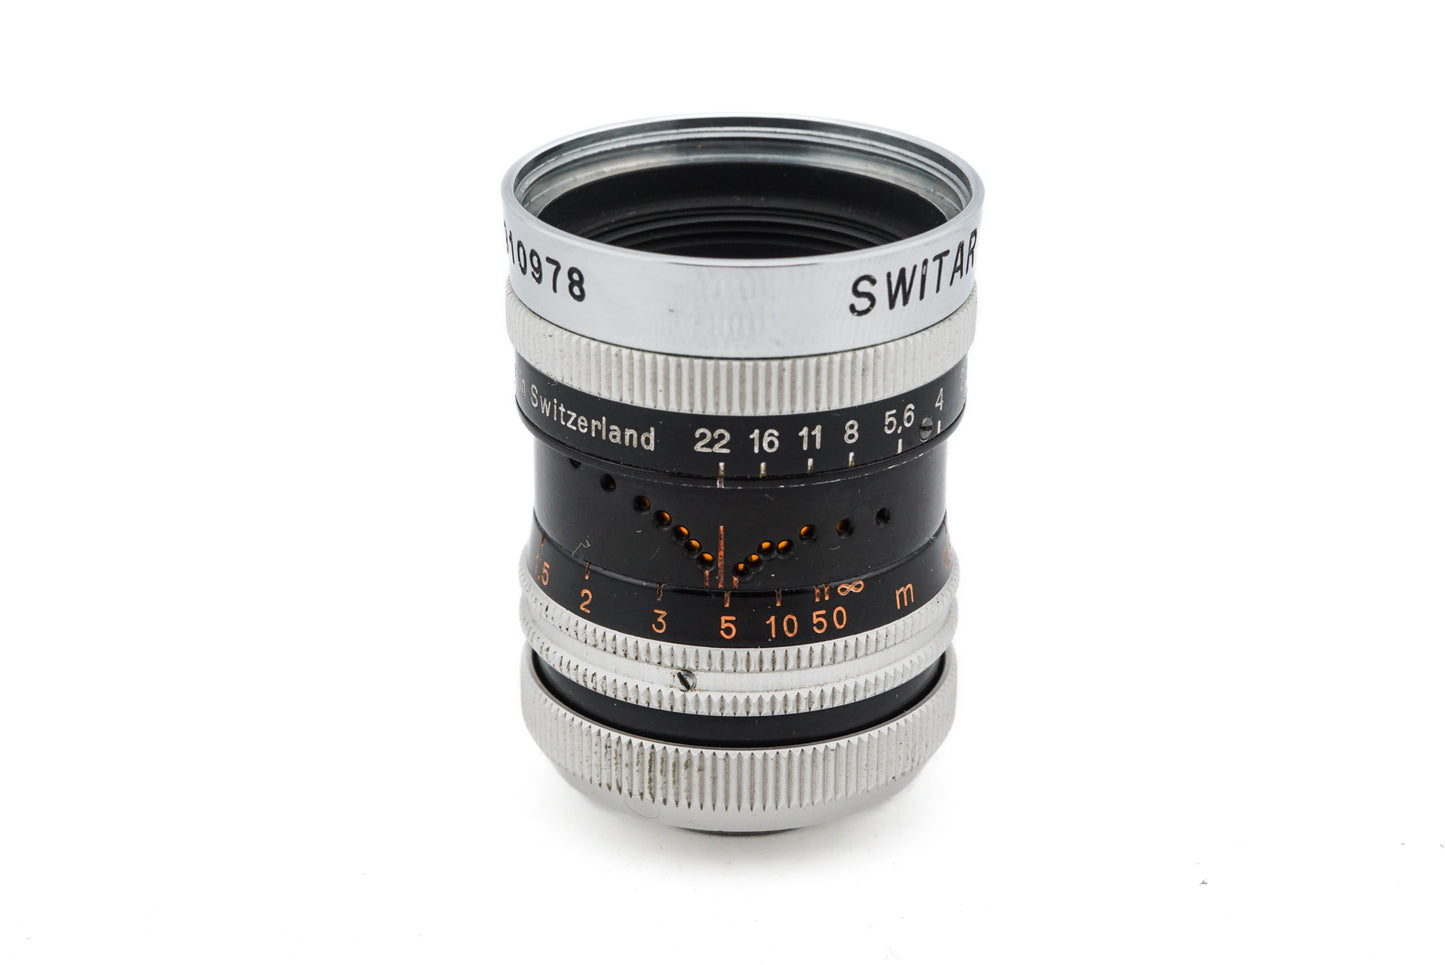 Kern-Paillard 36mm f1.8 Switar - Lens